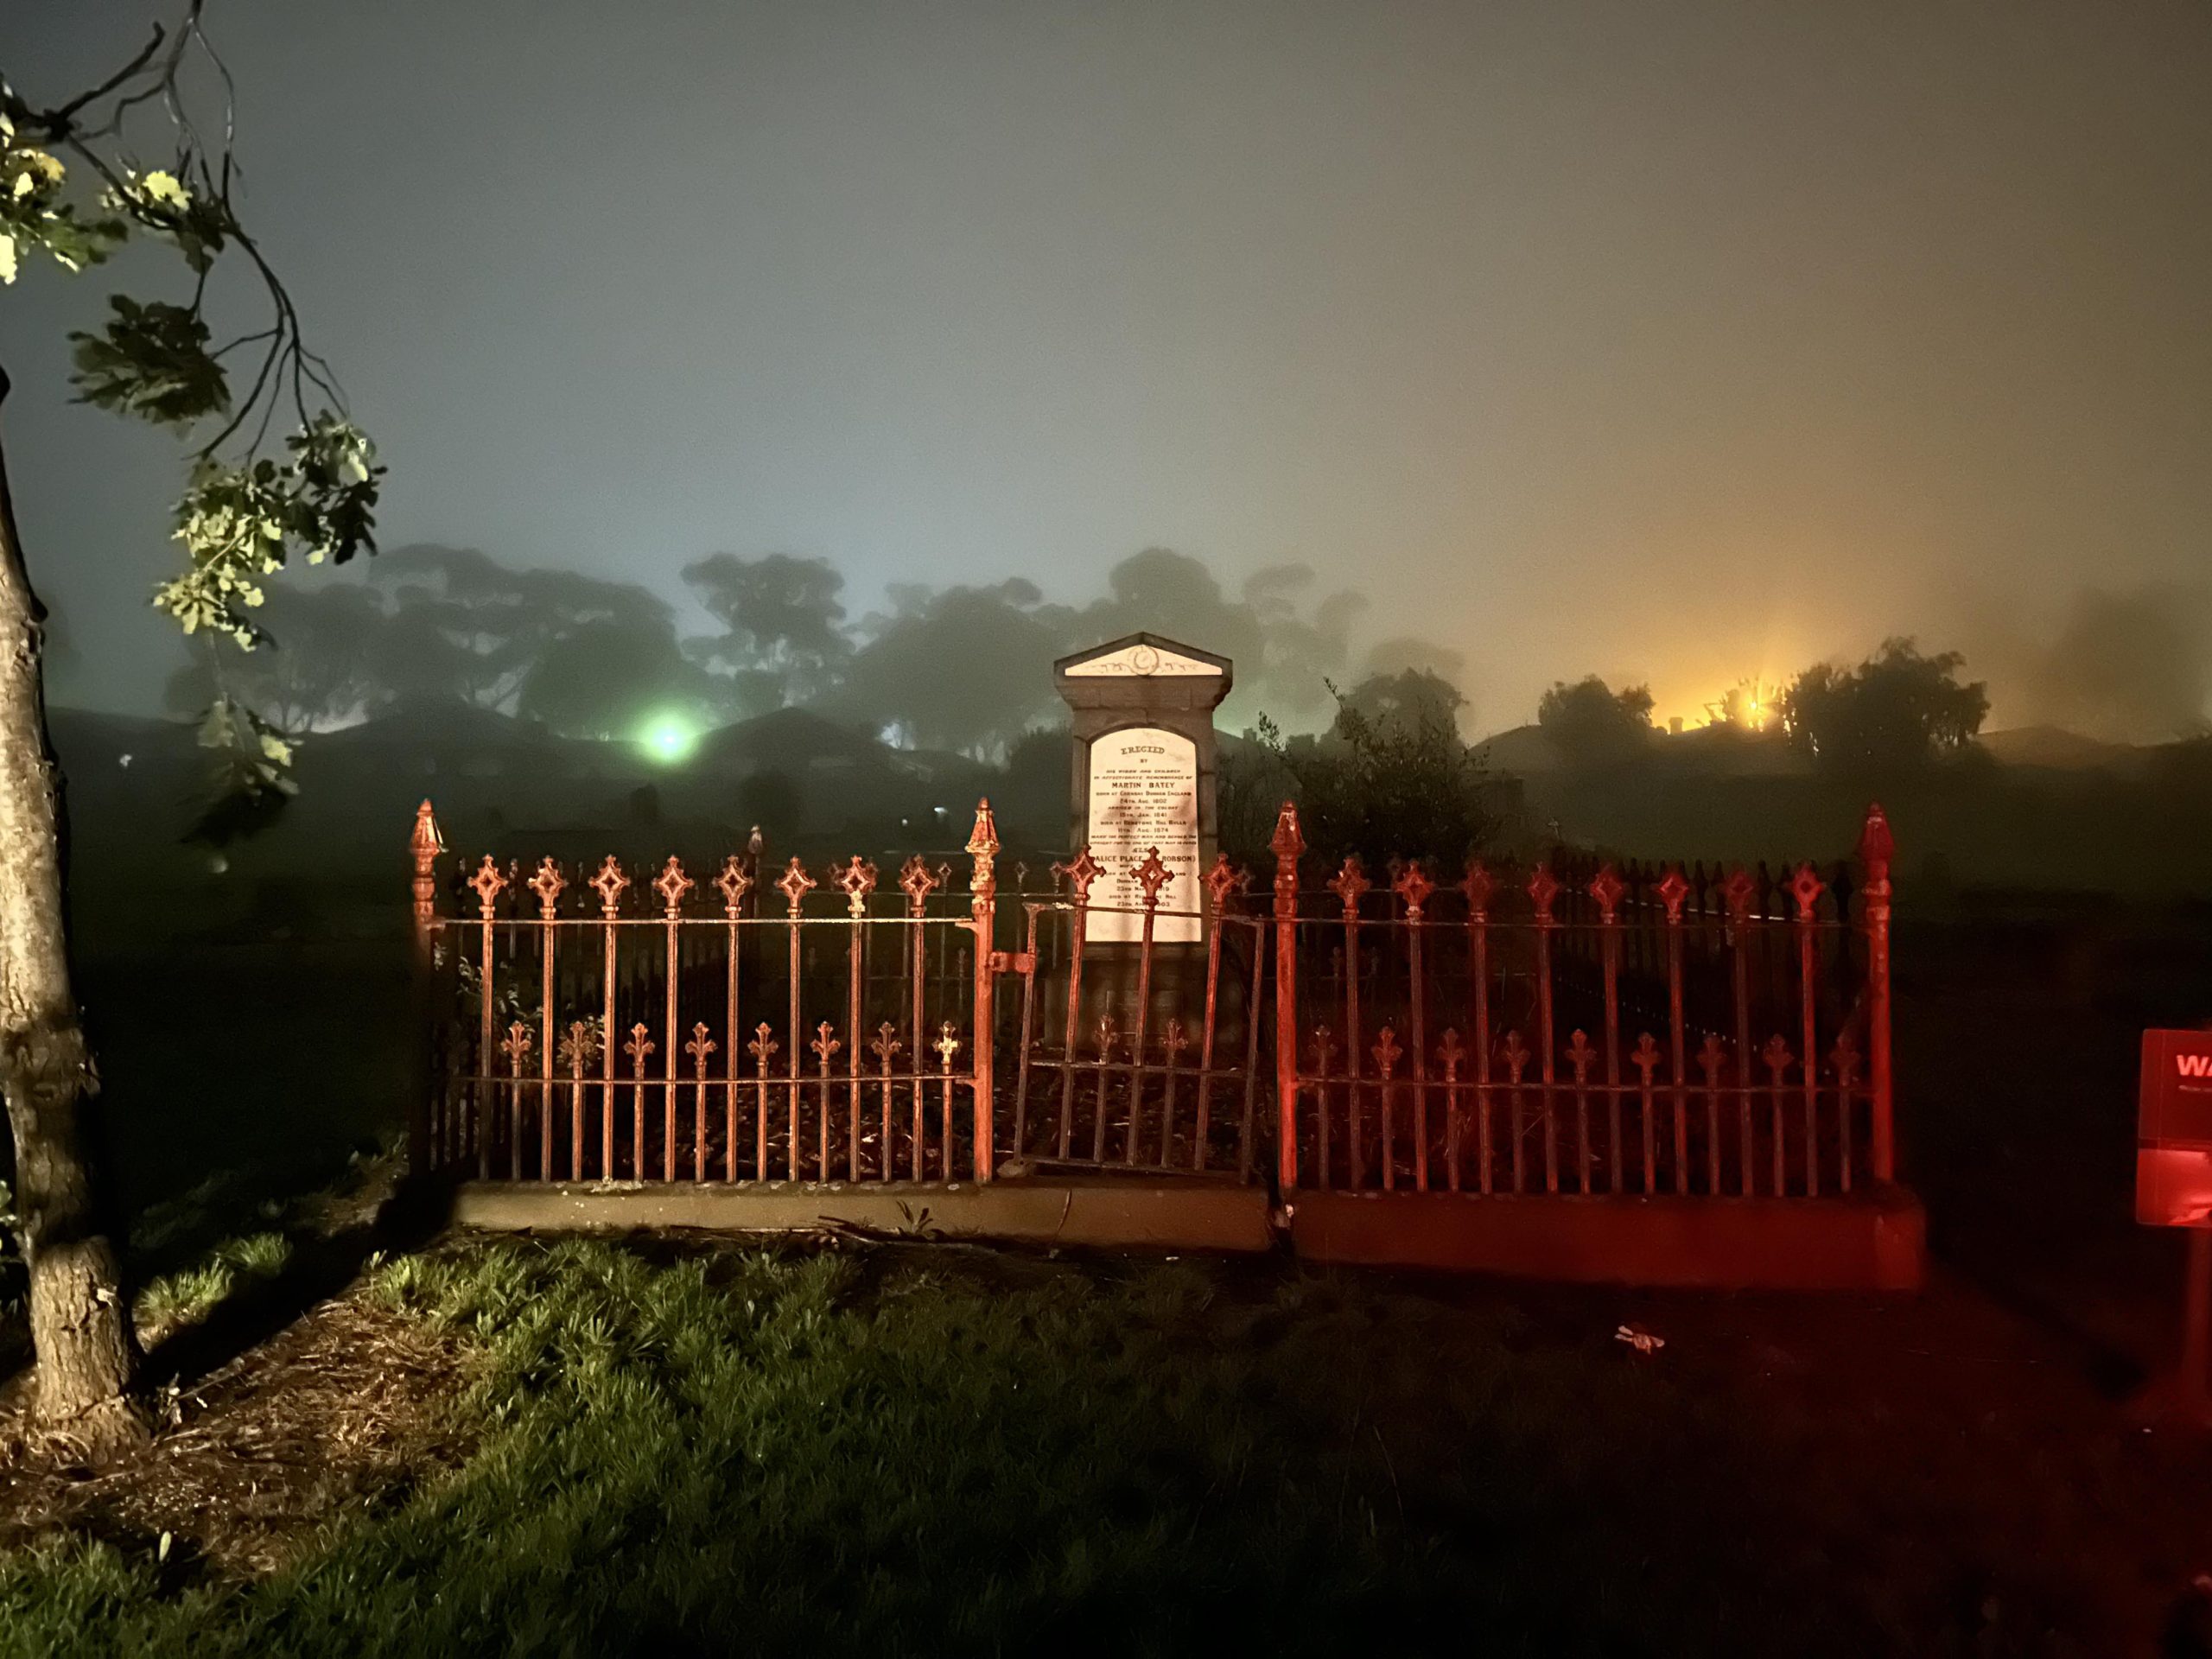 Sunbury Cemetery on a misty night. Photo by Dave White.